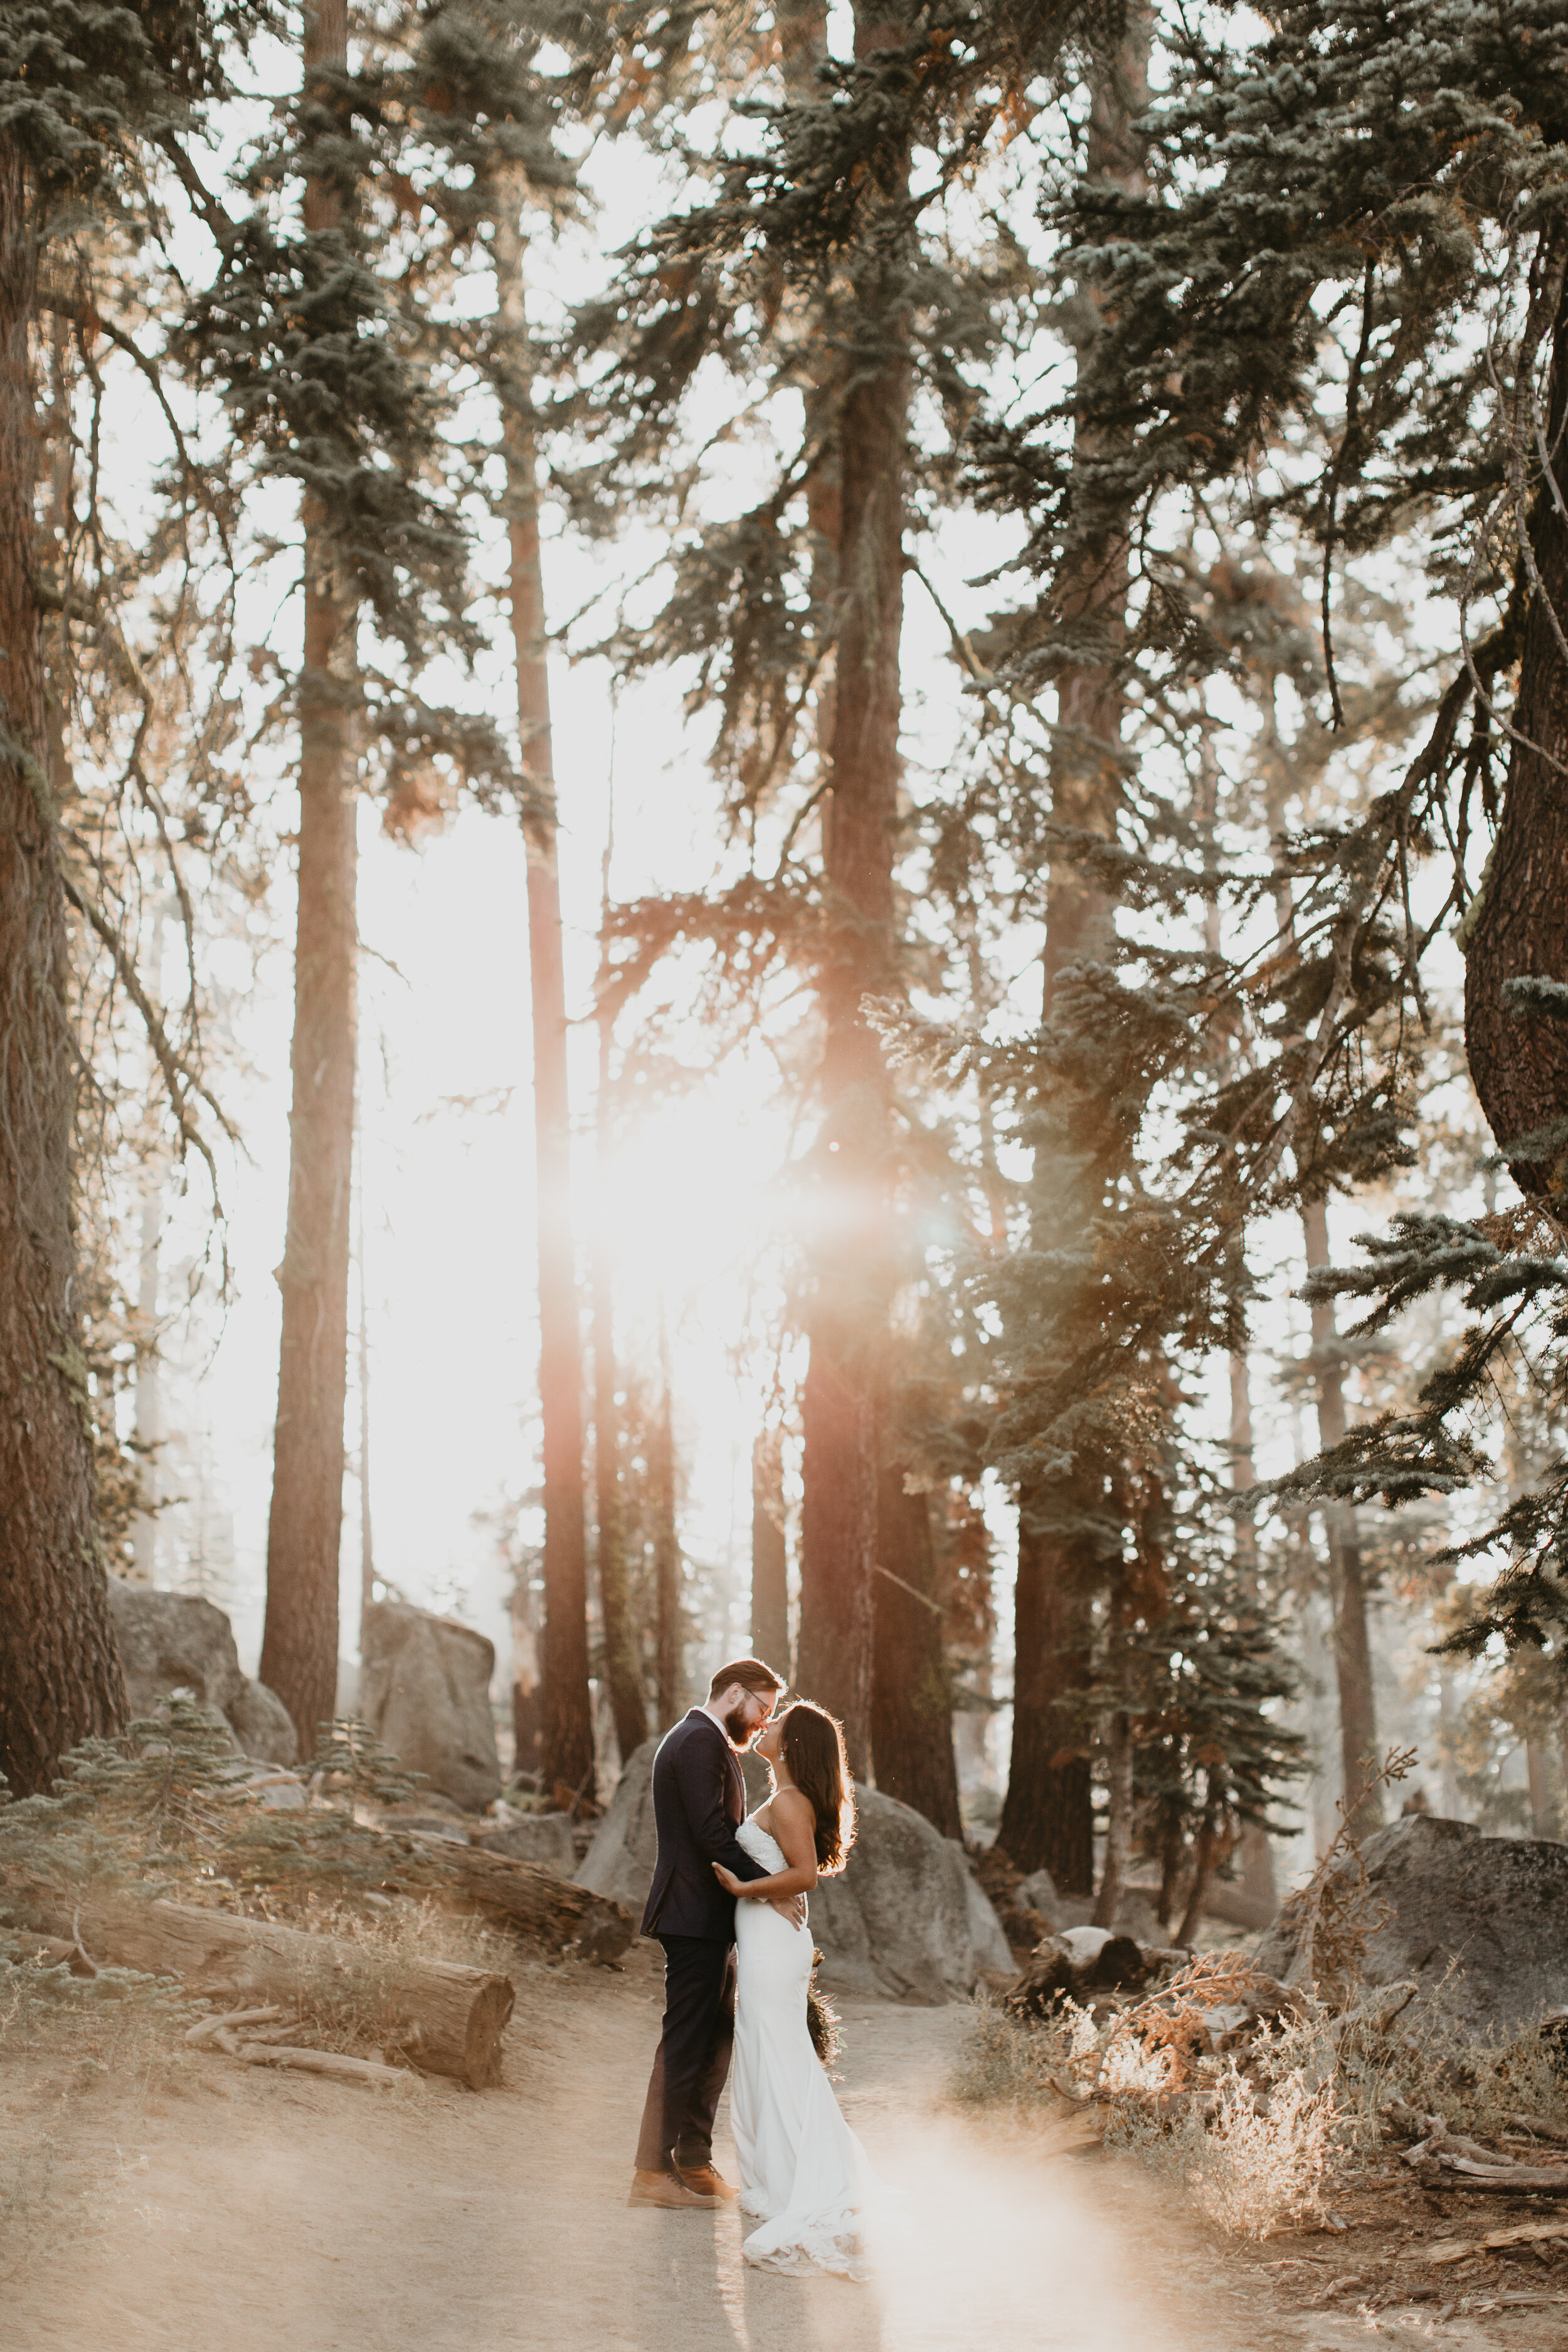 Nicole-Daacke-Photography-yosemite-national-park-elopement-photography-adventure-elopement-in-yosemite-taft-point-sunset-elopement-photographs-california-intimate-destination-wedding-in-yosemite-national-park-6991.jpg